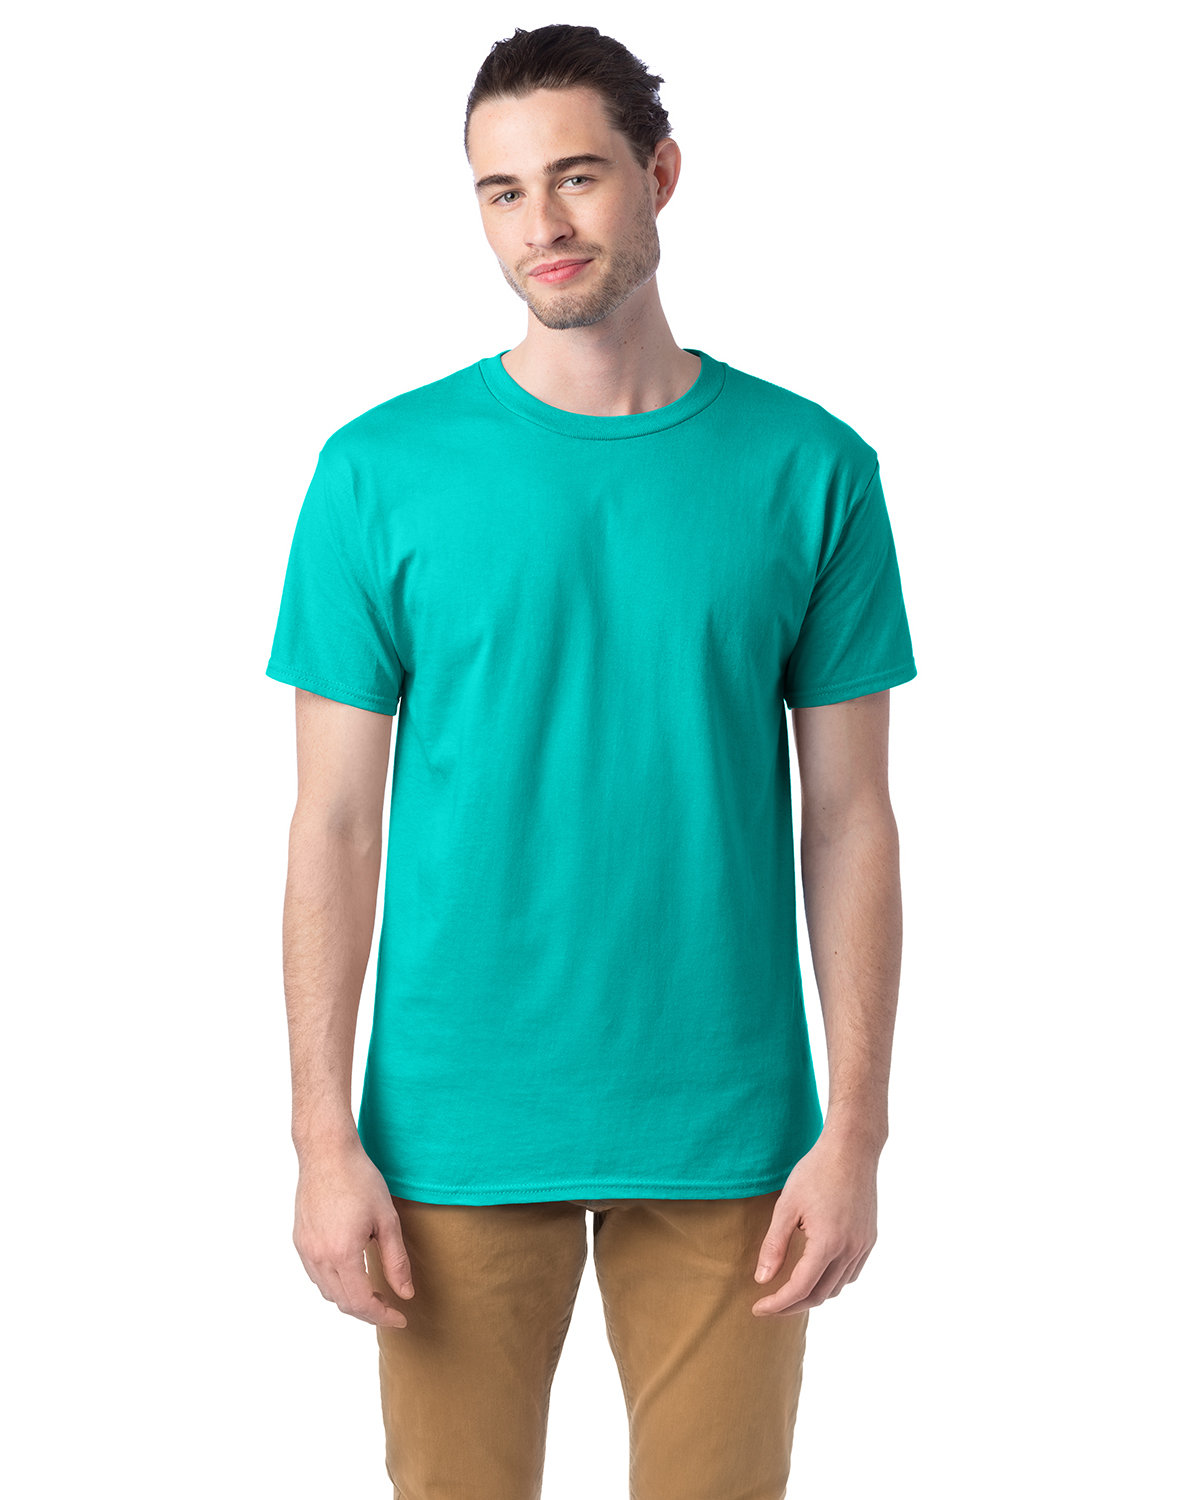 Hanes Unisex 5.2 oz., Comfortsoft® Cotton T-Shirt ATHLETIC TEAL 